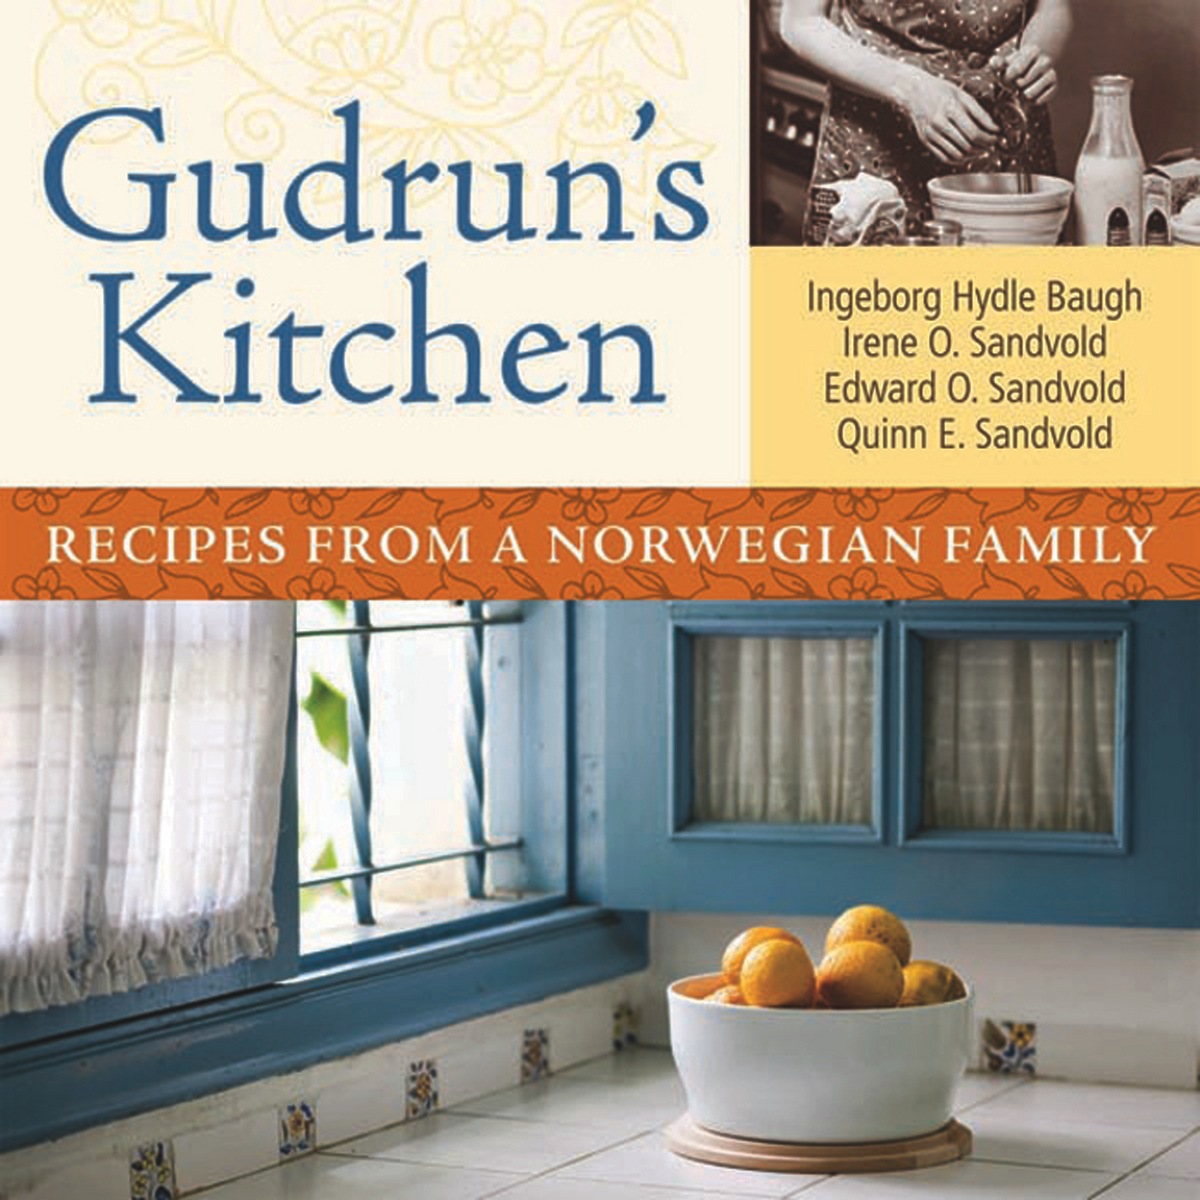 Gudrun's Kitchen: Recipes from a Norwegian Family Irene O. Sandvold, Edward O. Sandvold, Quinn E. Sandvold and Ingeborg Hydle Baugh